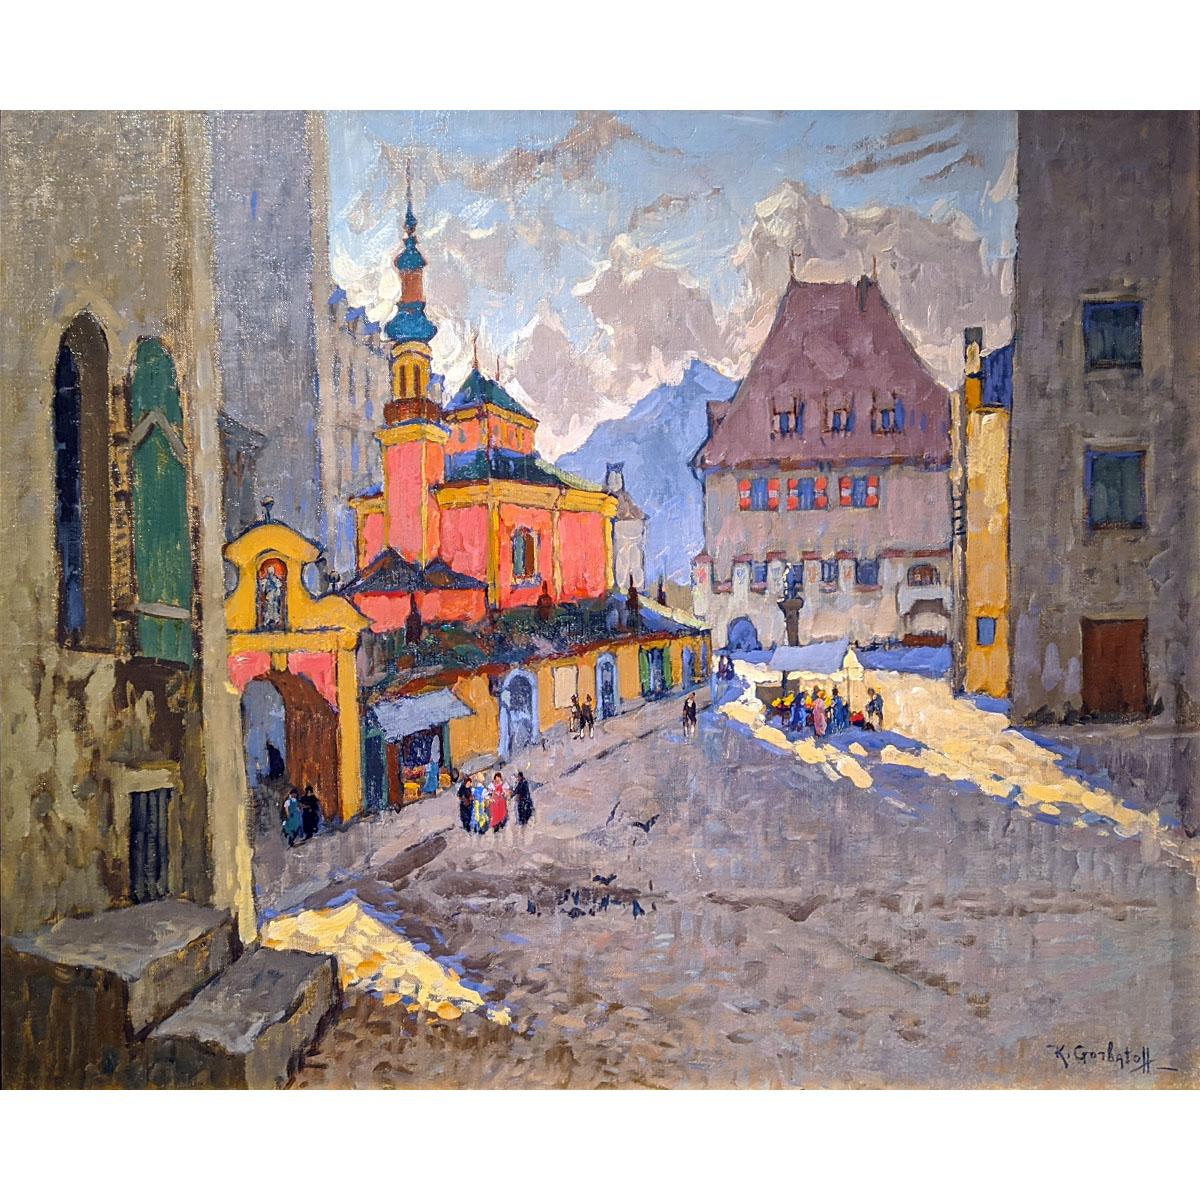 Константин Горбатов. Халль. Вид улицы с церковью. 1930-е